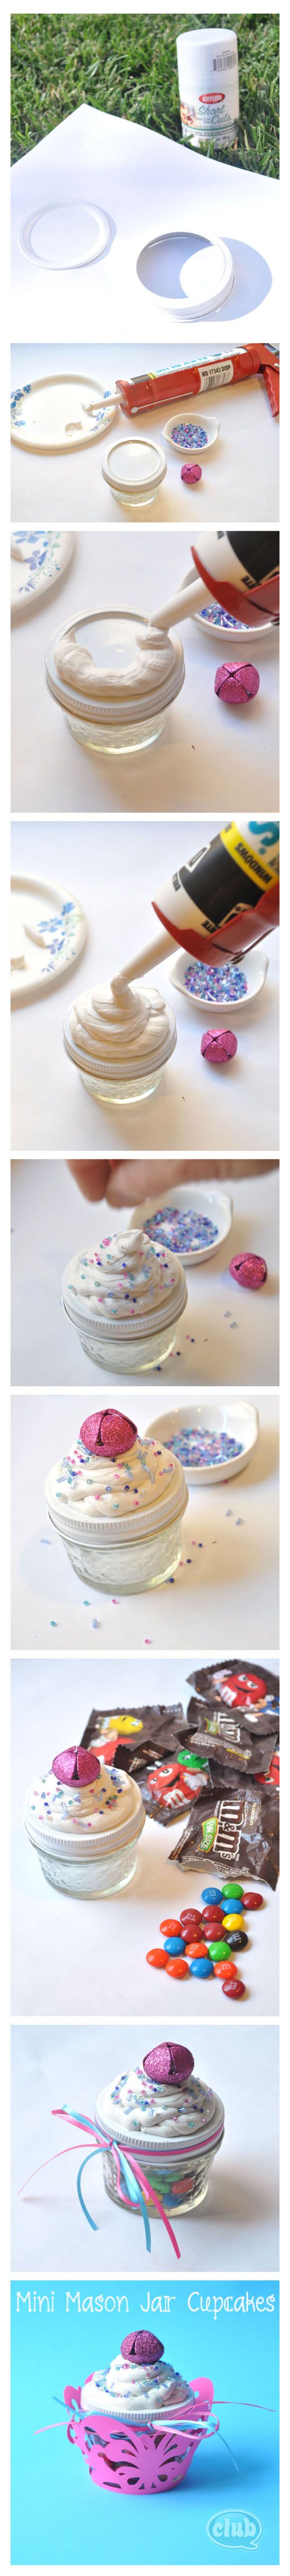 DIY Mason jar cupcakes!